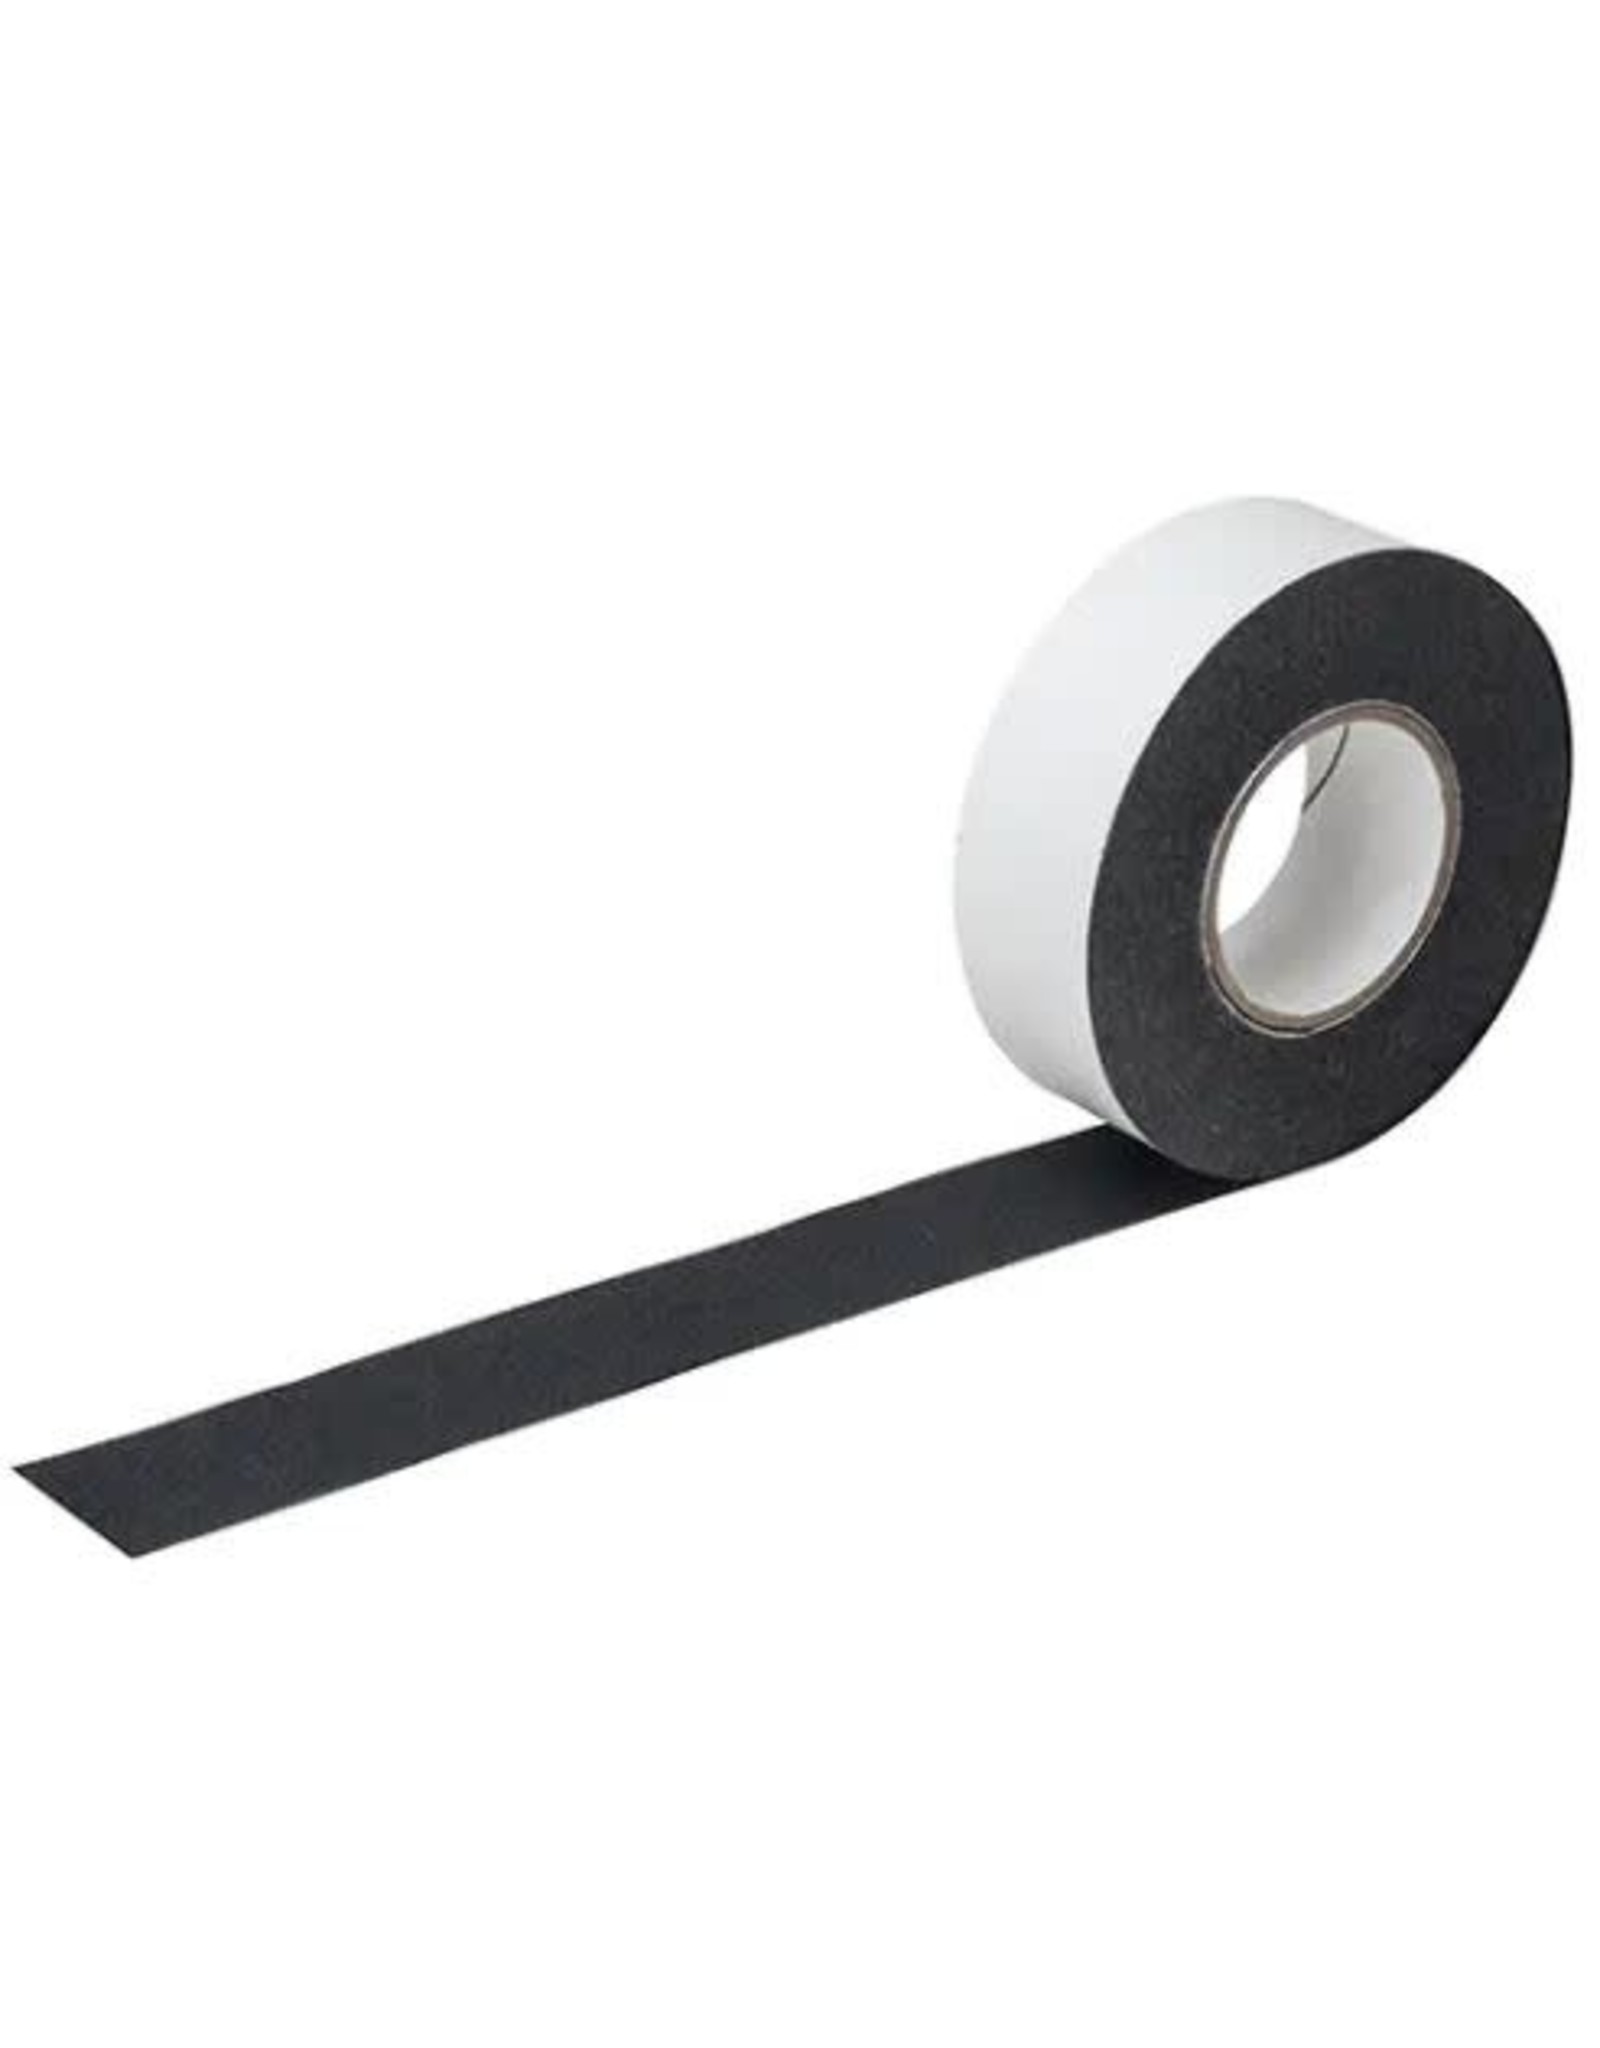 Zenith Anti-Skid Tape, Black, 2" x 60'